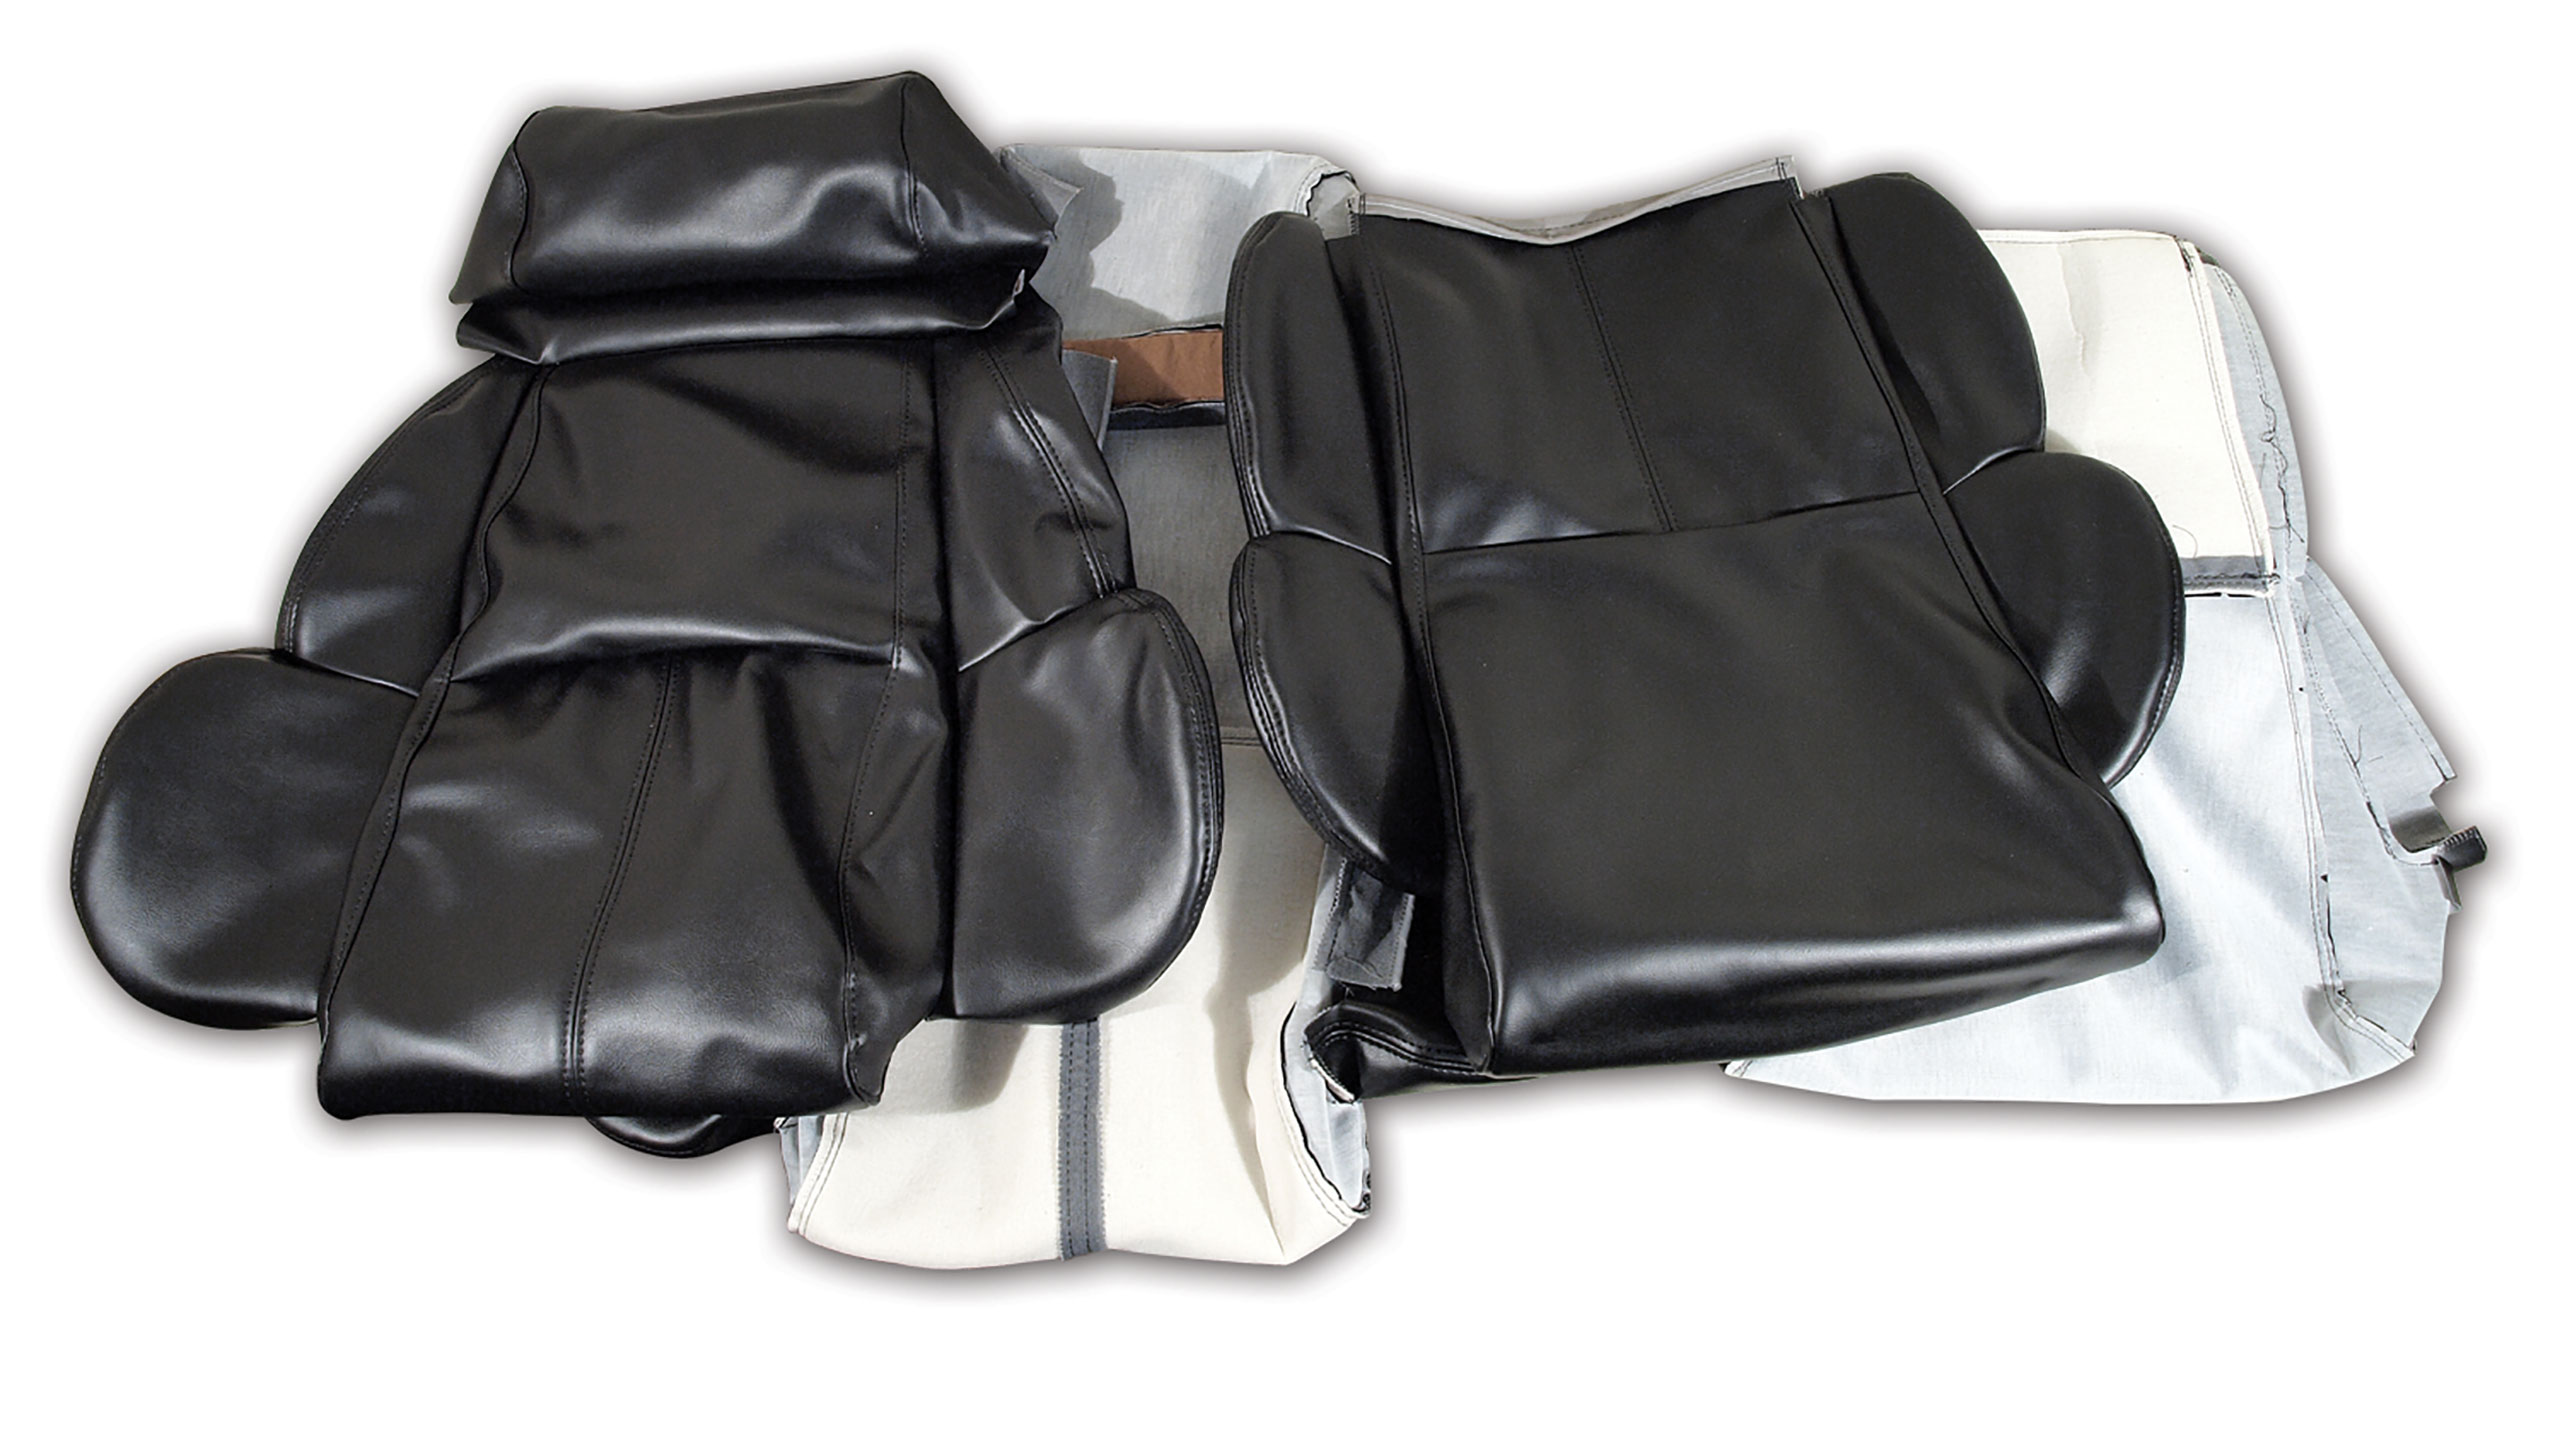 1989-1992 Corvette C4 "Leather-Like" Vinyl Seat Covers Black Standard CA-421920 